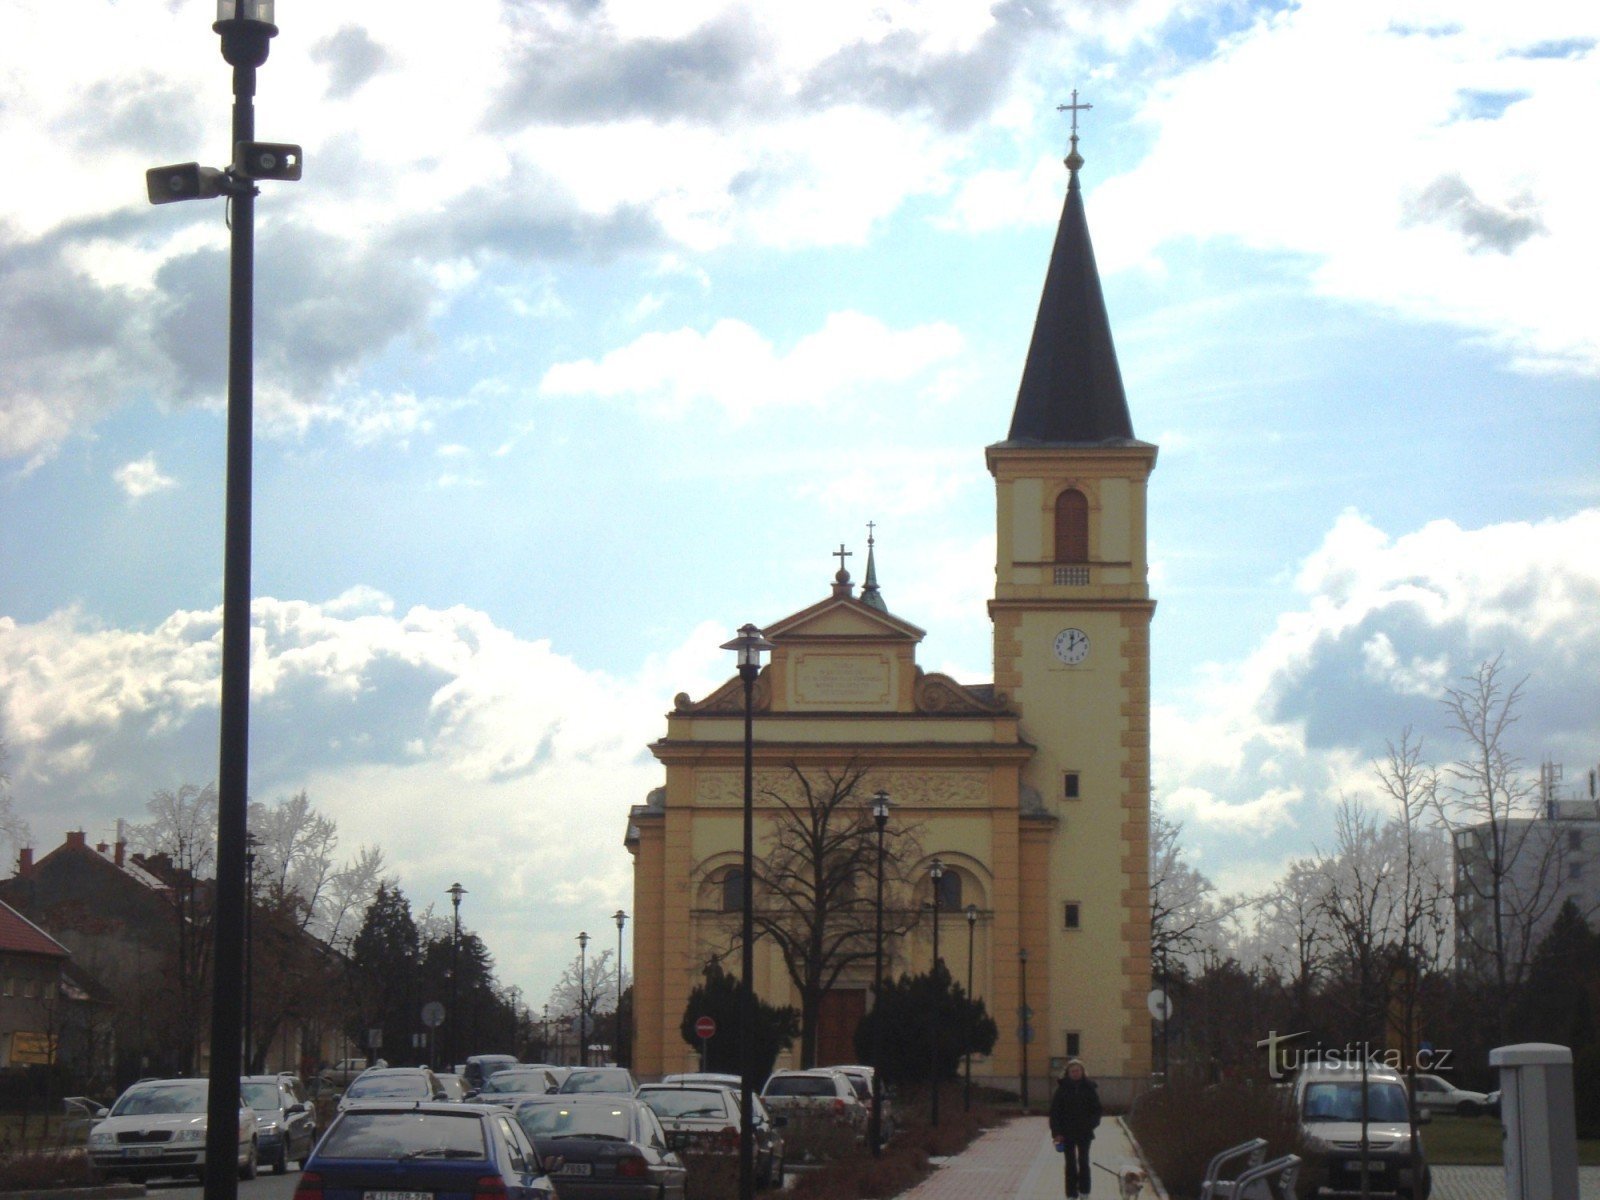 Semiremorcă Holice-Svobody cu biserica parohială Sf. Urban - Foto: Ulrych Mir.